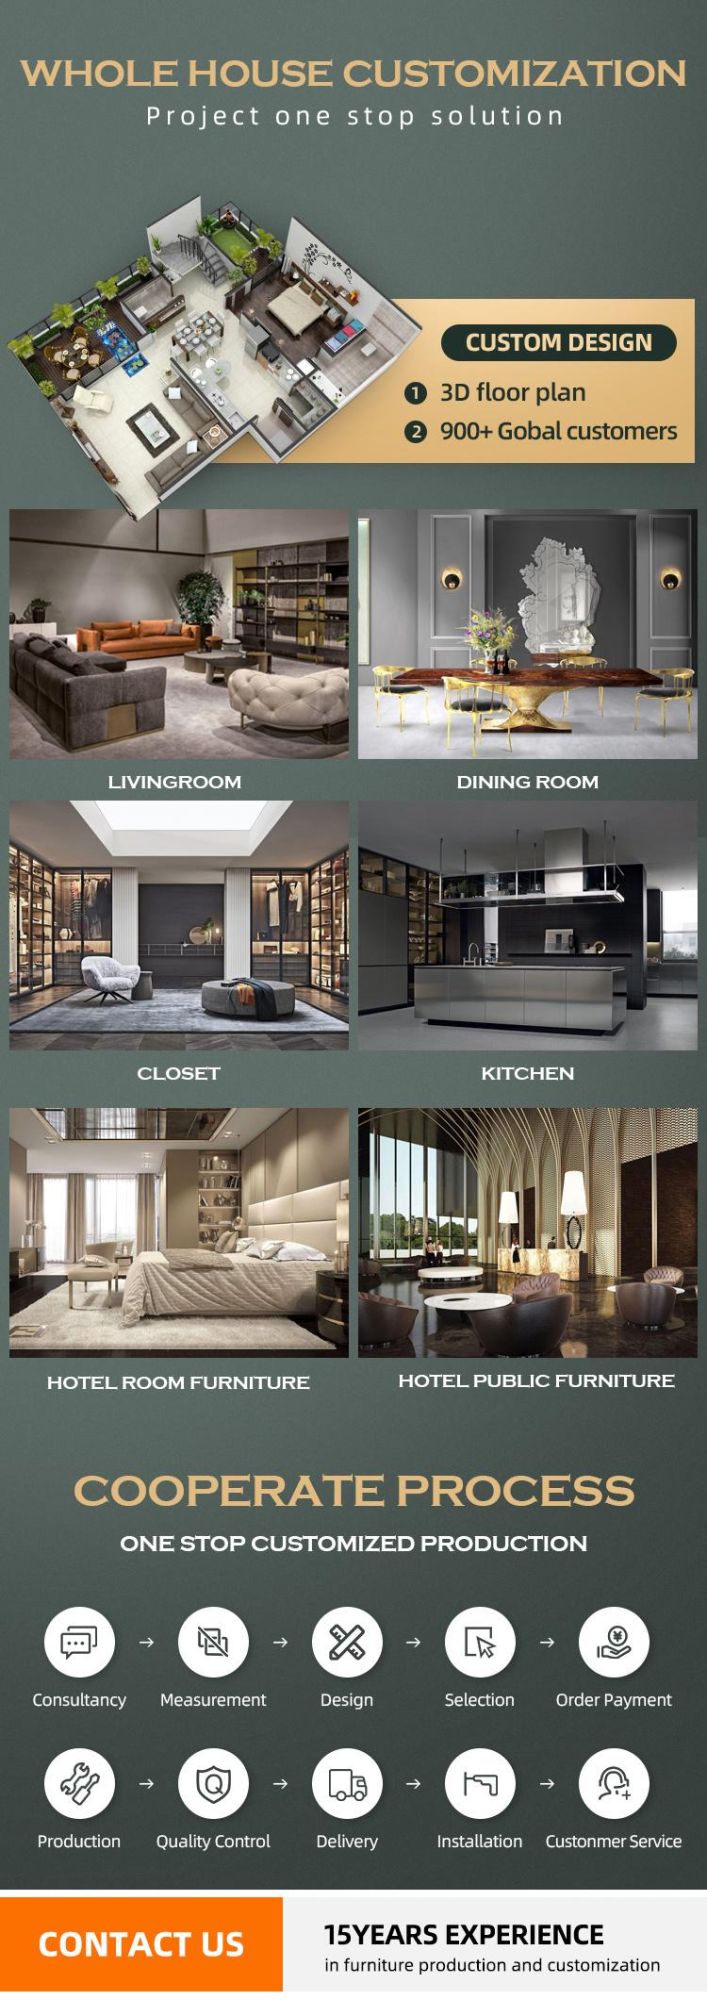 2021 Luxury Kitchen Furniture Solid Wood Cabinet Dark Color